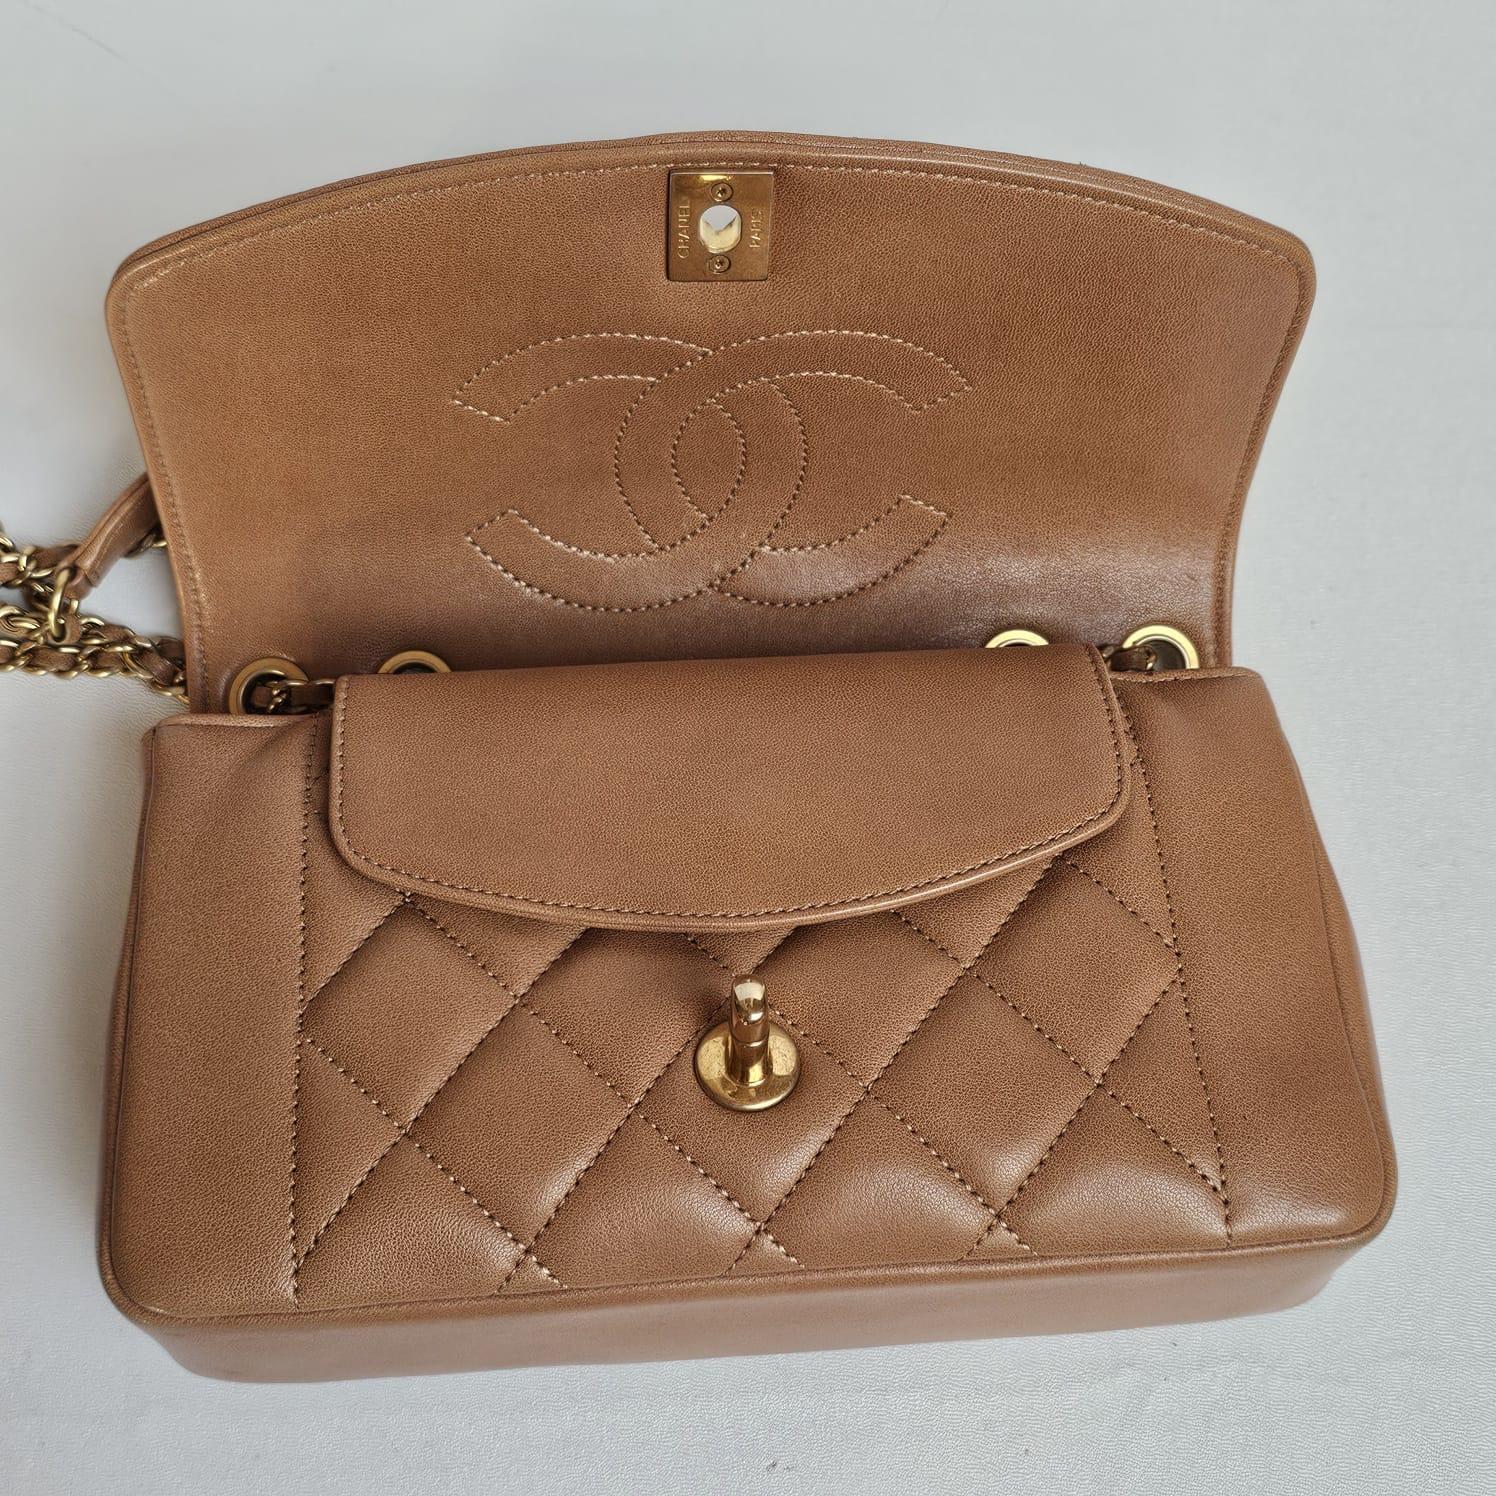 2014-2015 Chanel Caramel Diana Flap Bag For Sale 12